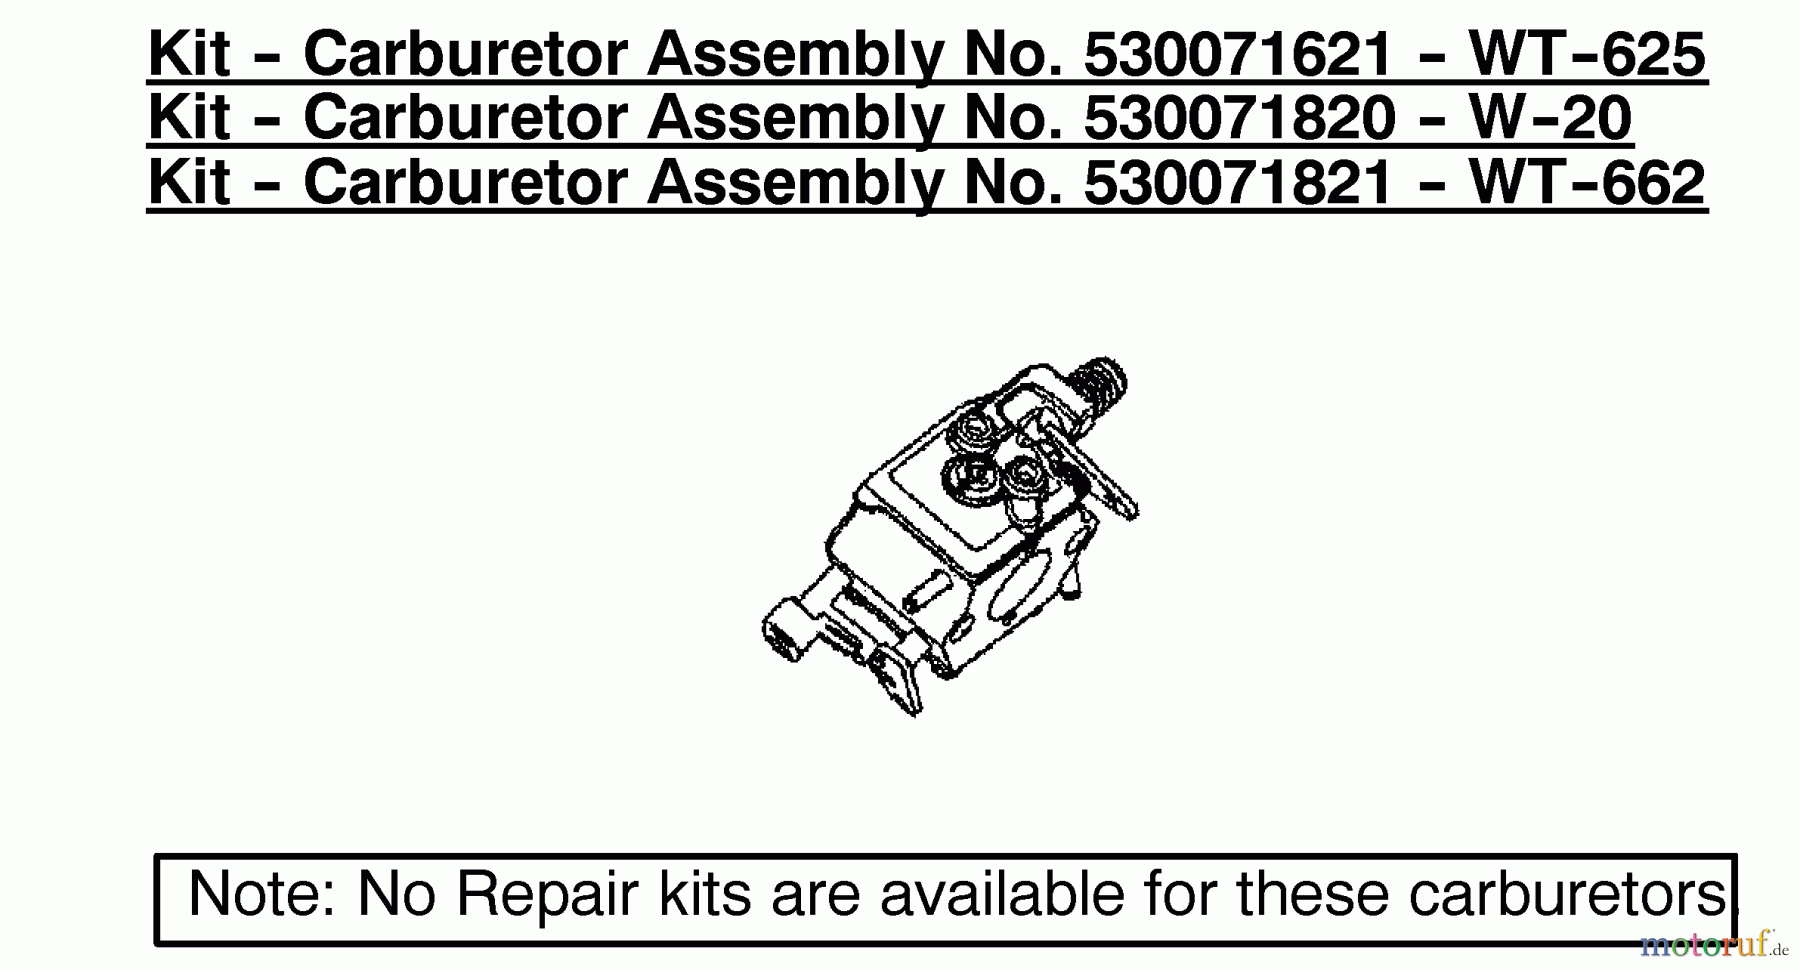  Poulan / Weed Eater Motorsägen 2550 (Type 5) - Poulan Woodmaster Chainsaw Kit - Carburetor Assembly 530071621/530071820/530071821